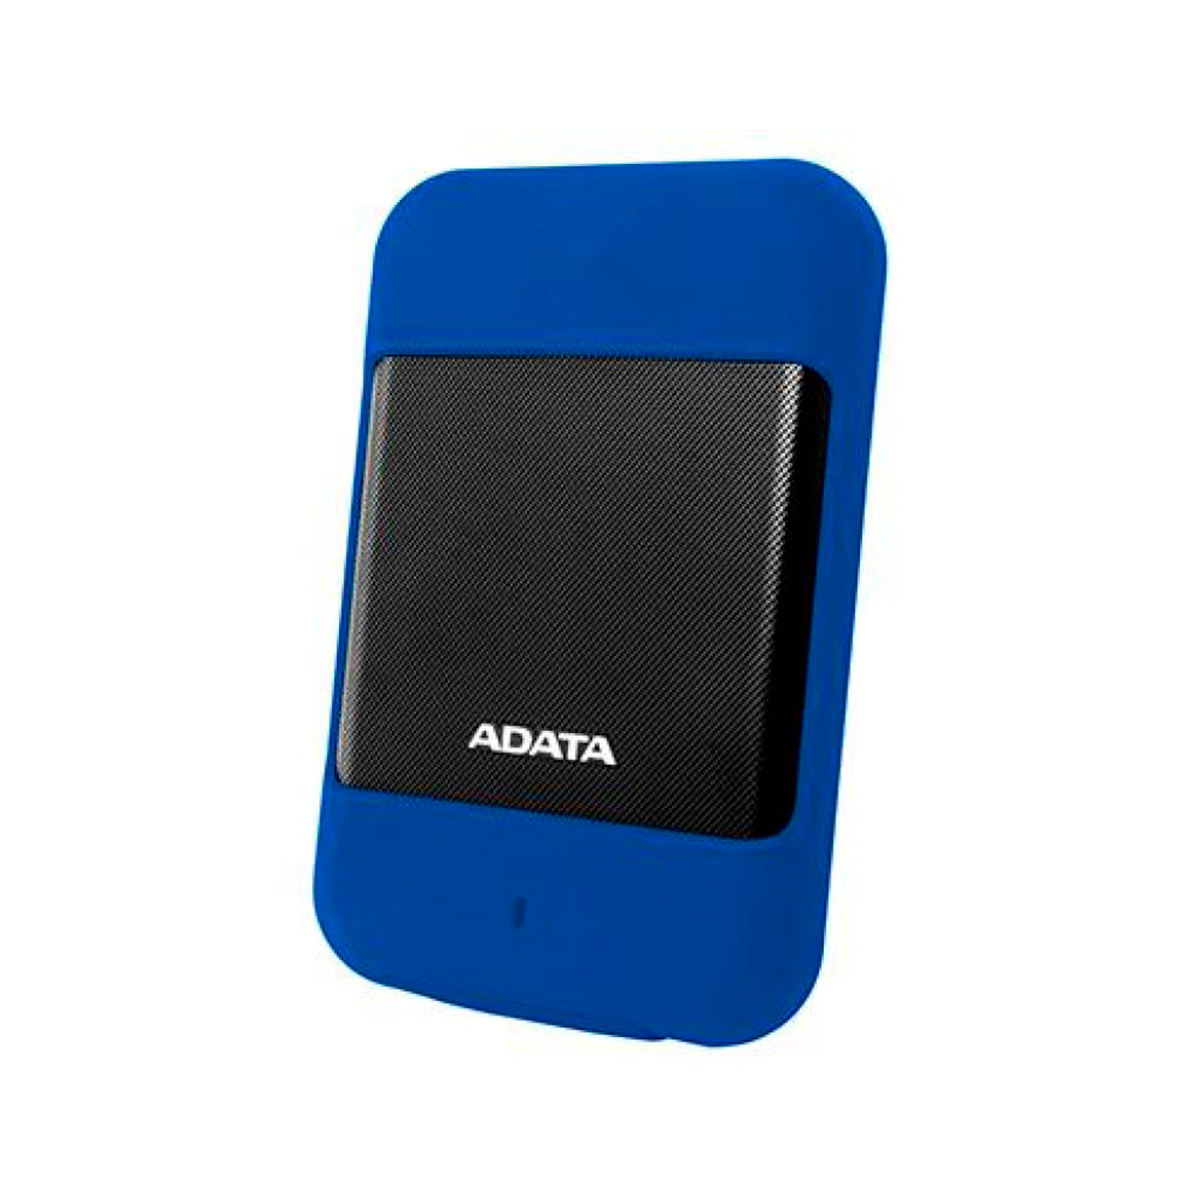 HD Externo 1TB Portátil Adata HD700 - Proteção Anti Impacto - USB 3.1 - Preto e Azul - AHD700-1TU31-CBL